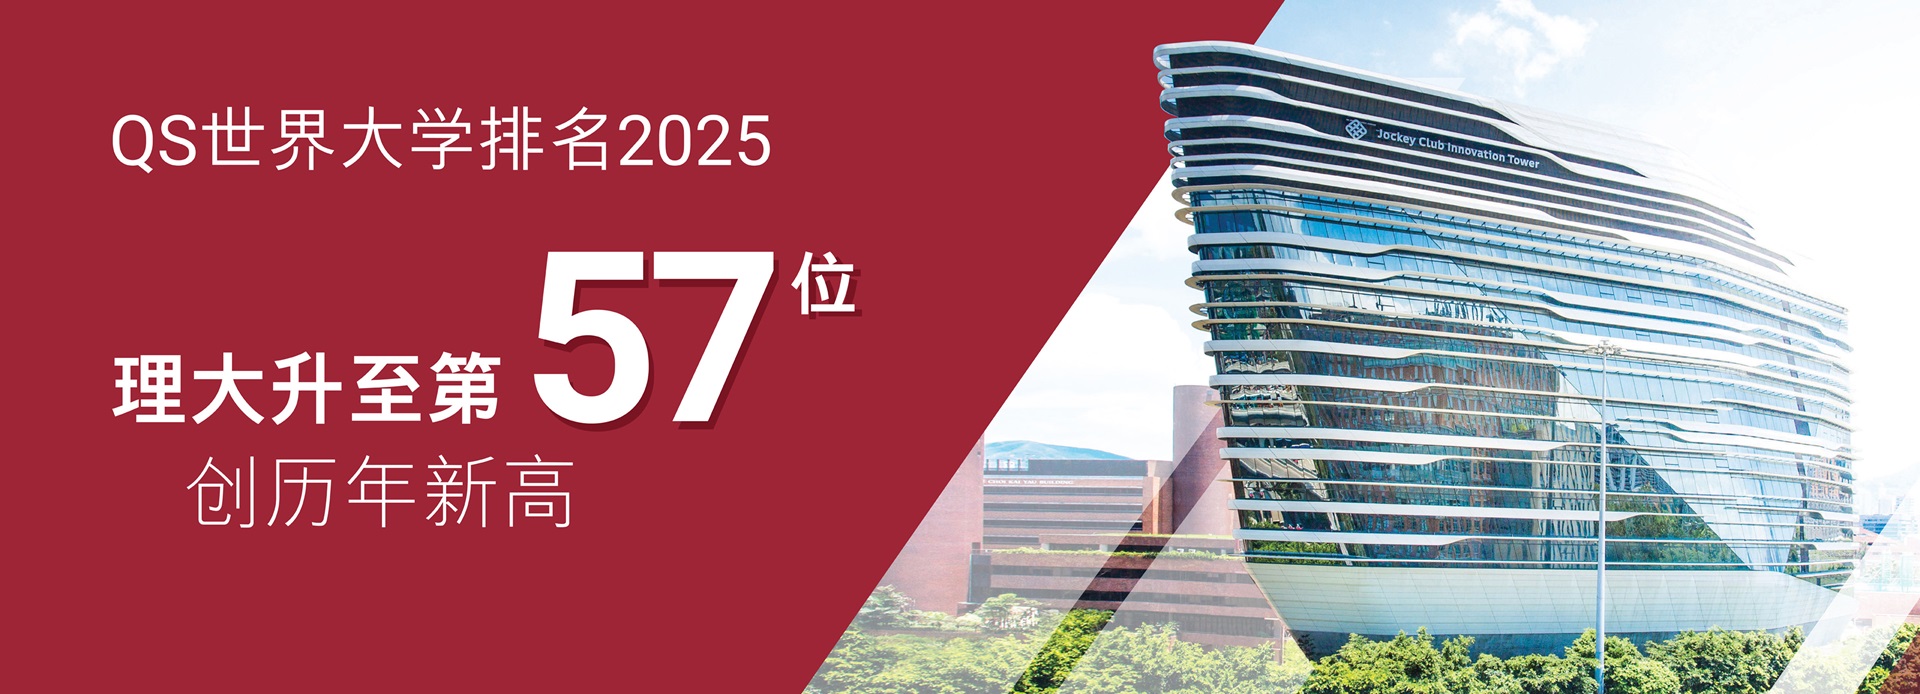 QS World University Rankings 2025_3840 x 1388_SC_5 Jun